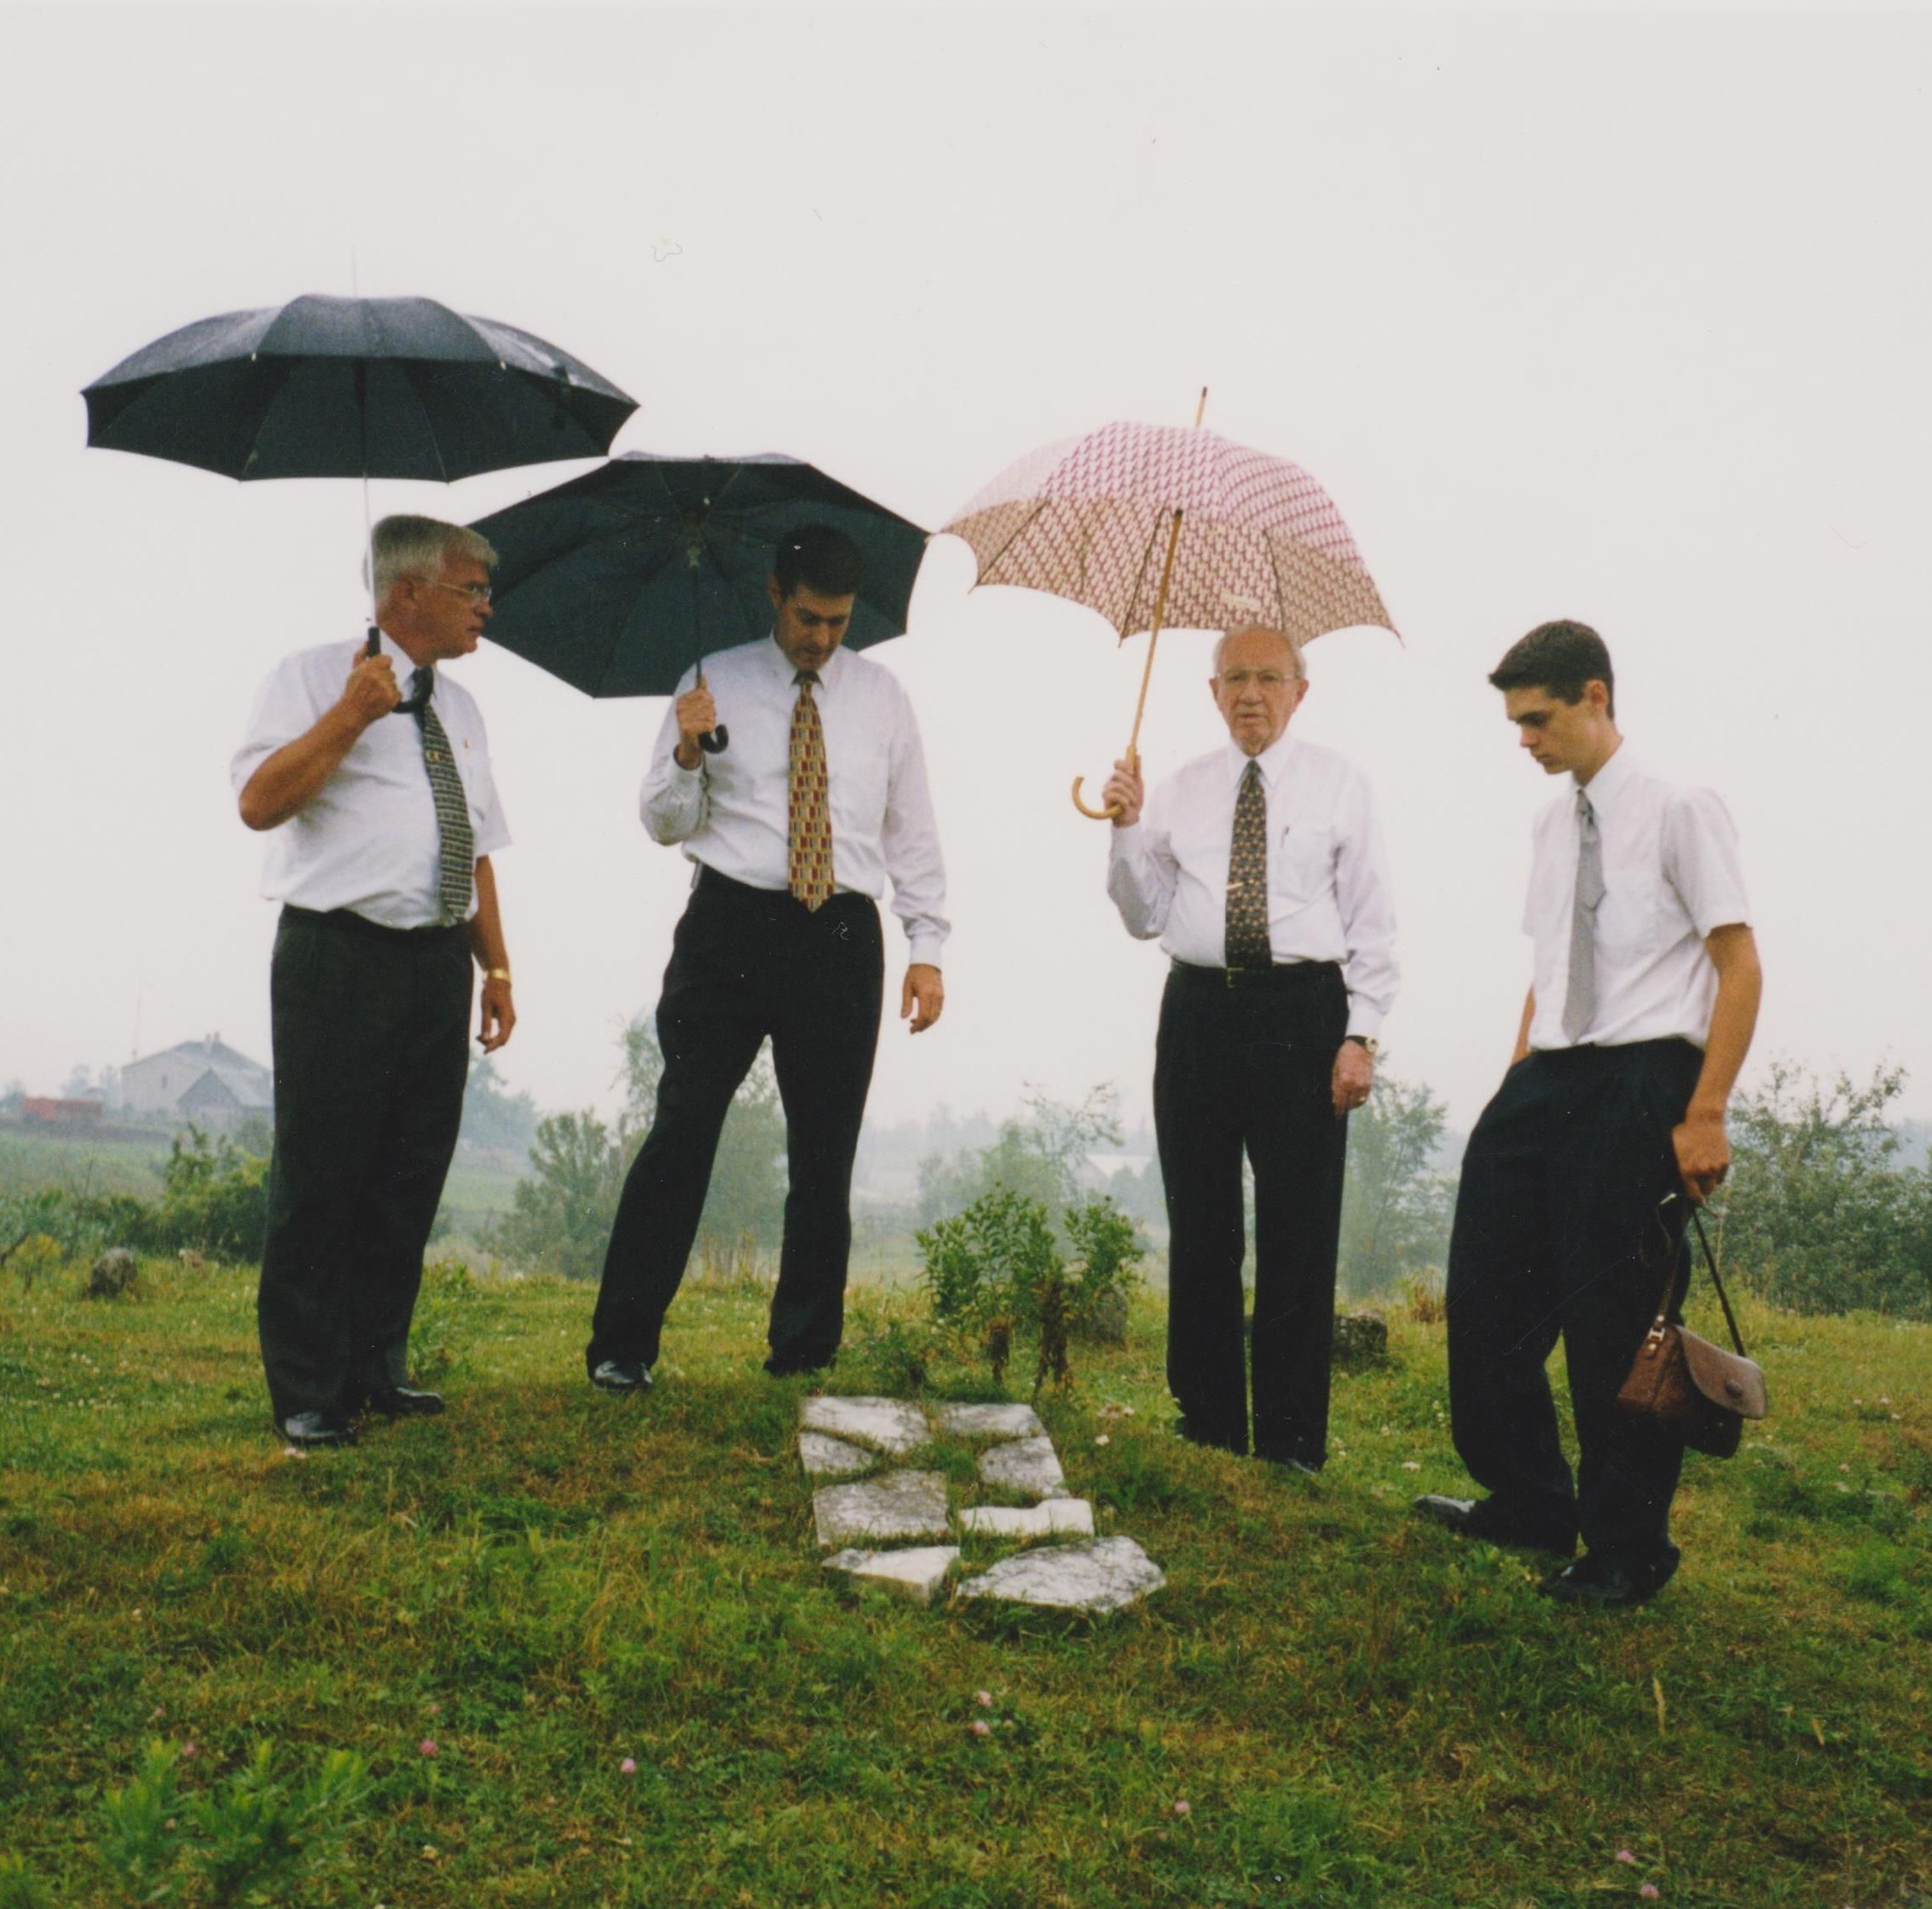 four people holding umbrellas